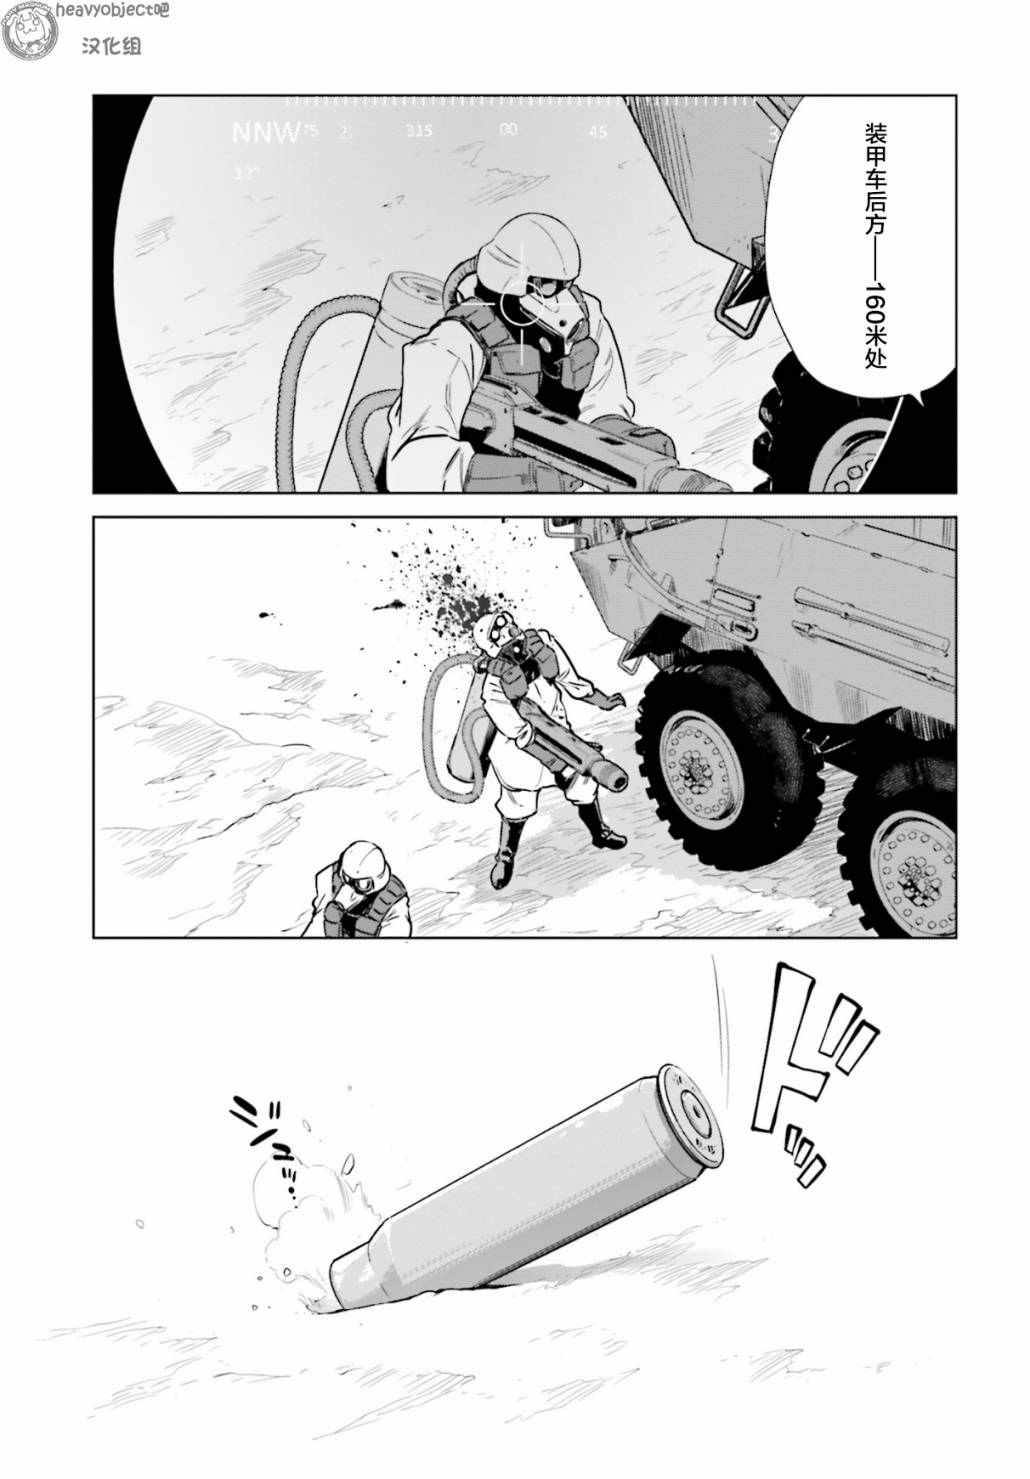 《重装武器Heavy Object A》漫画 Heavy Object A A3第01话